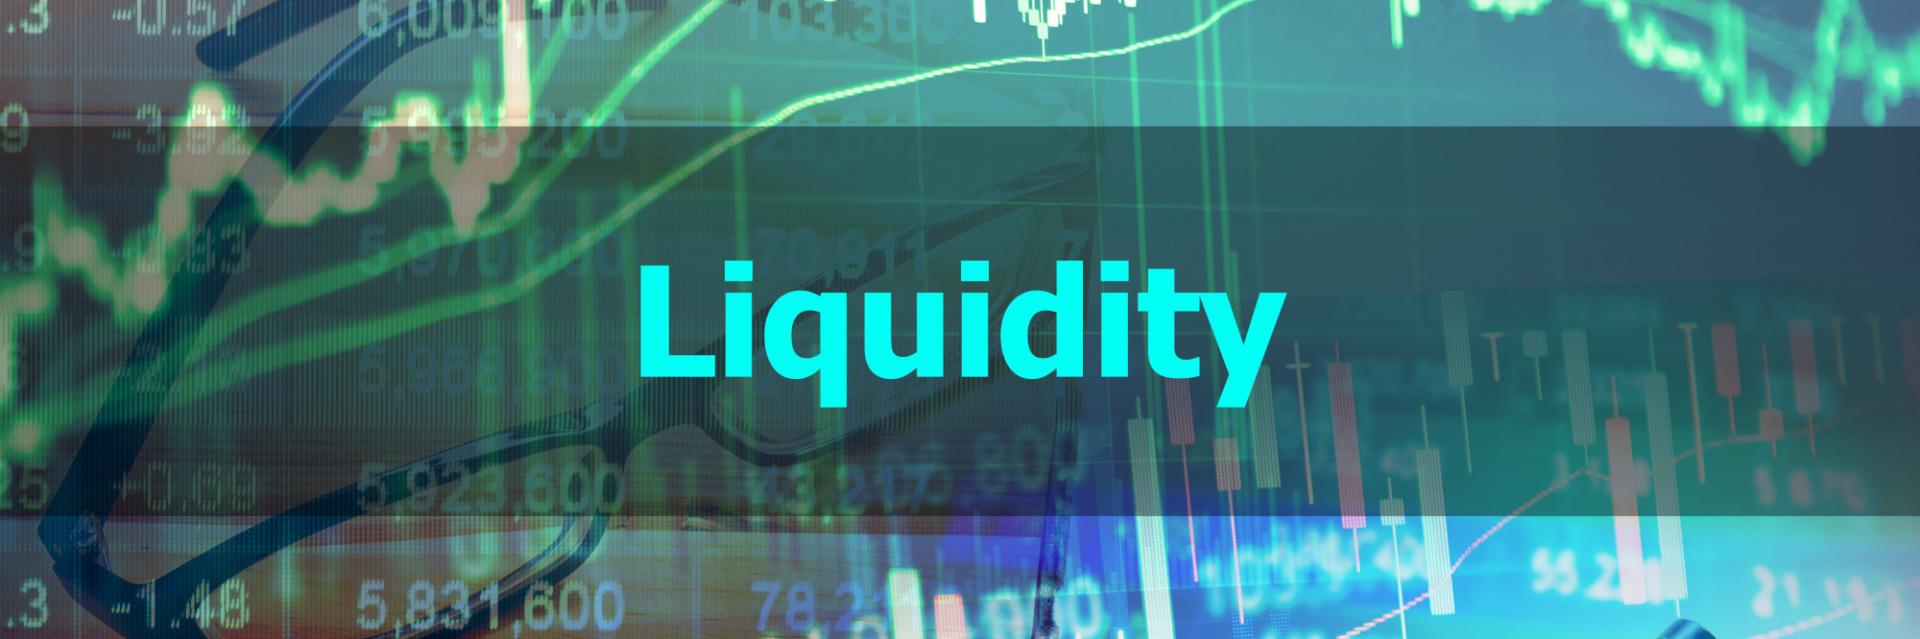 Liquidity and Sustainability Facility (LSF)